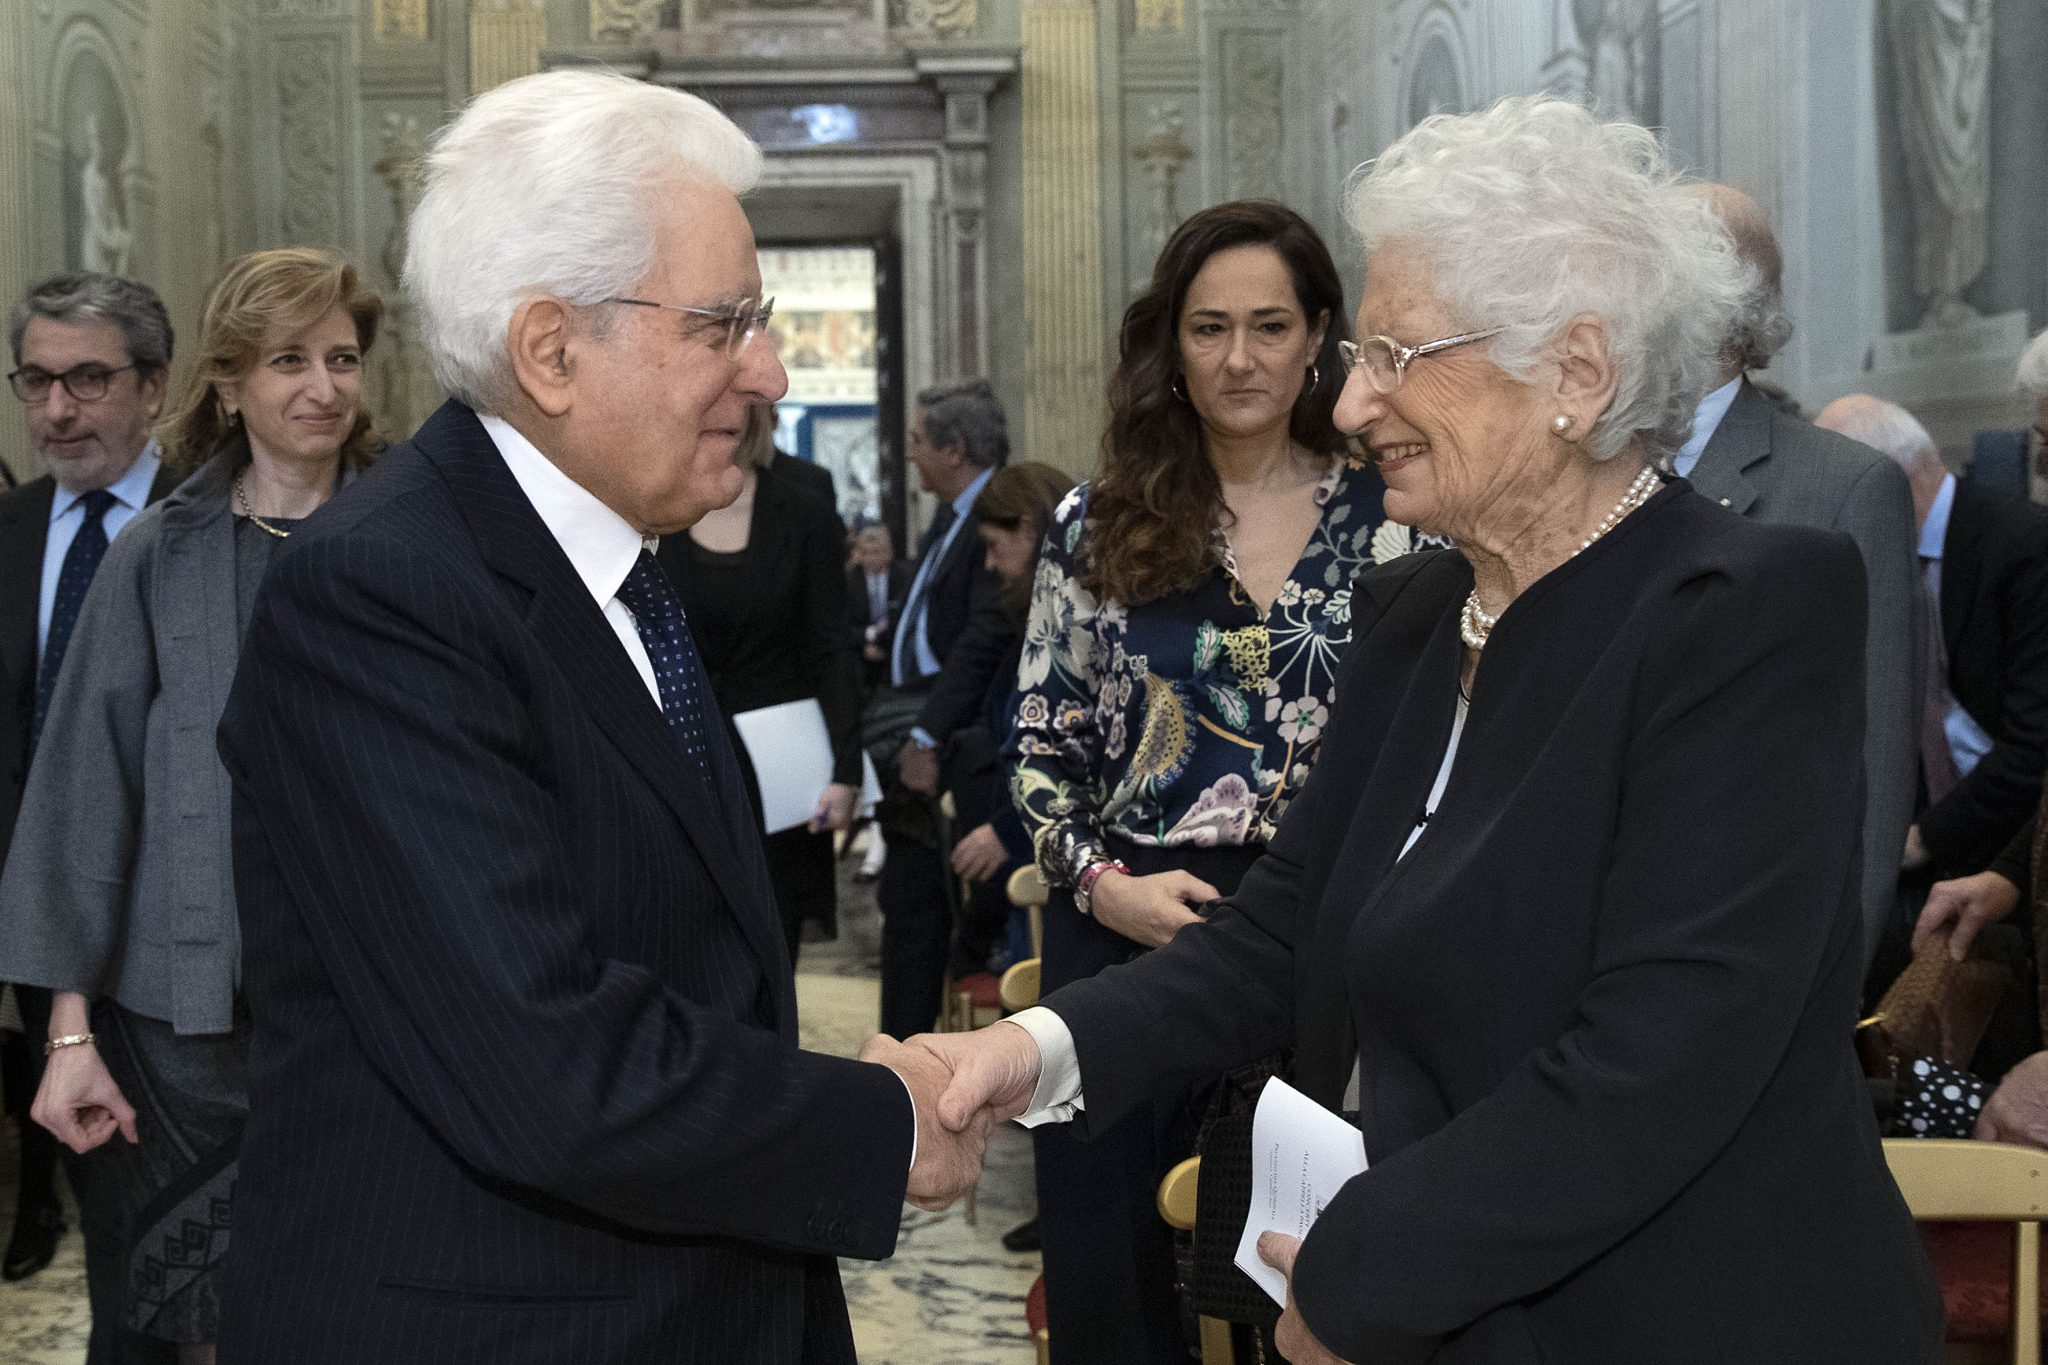 Liliana Segre. Photo Credit: Presidency of Italian Republic